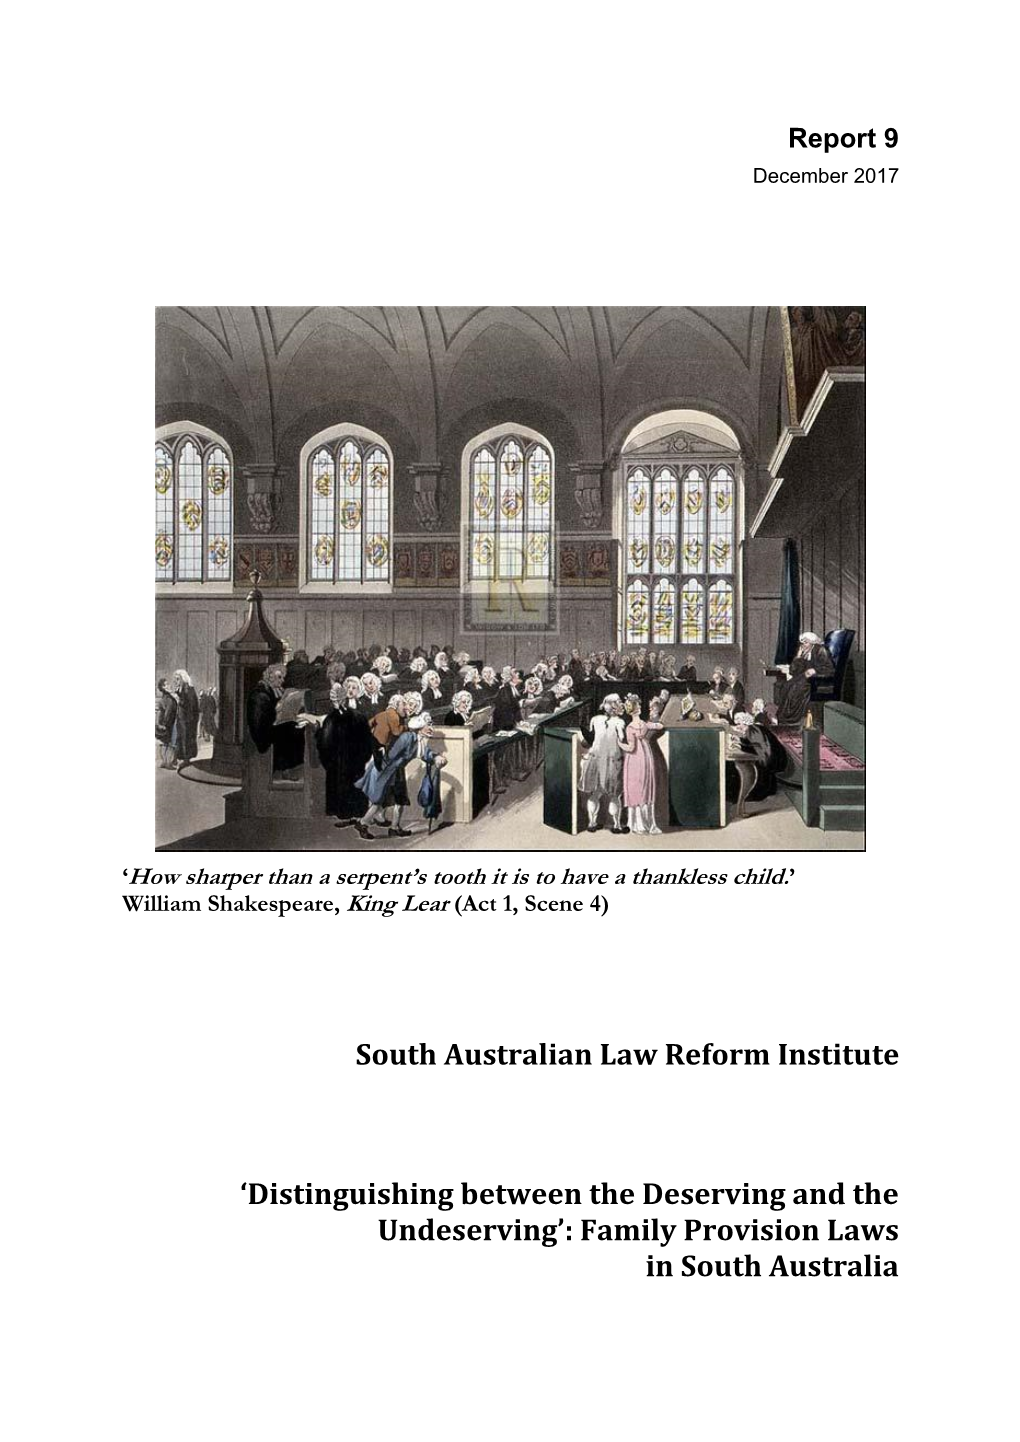 South Australian Law Reform Institute